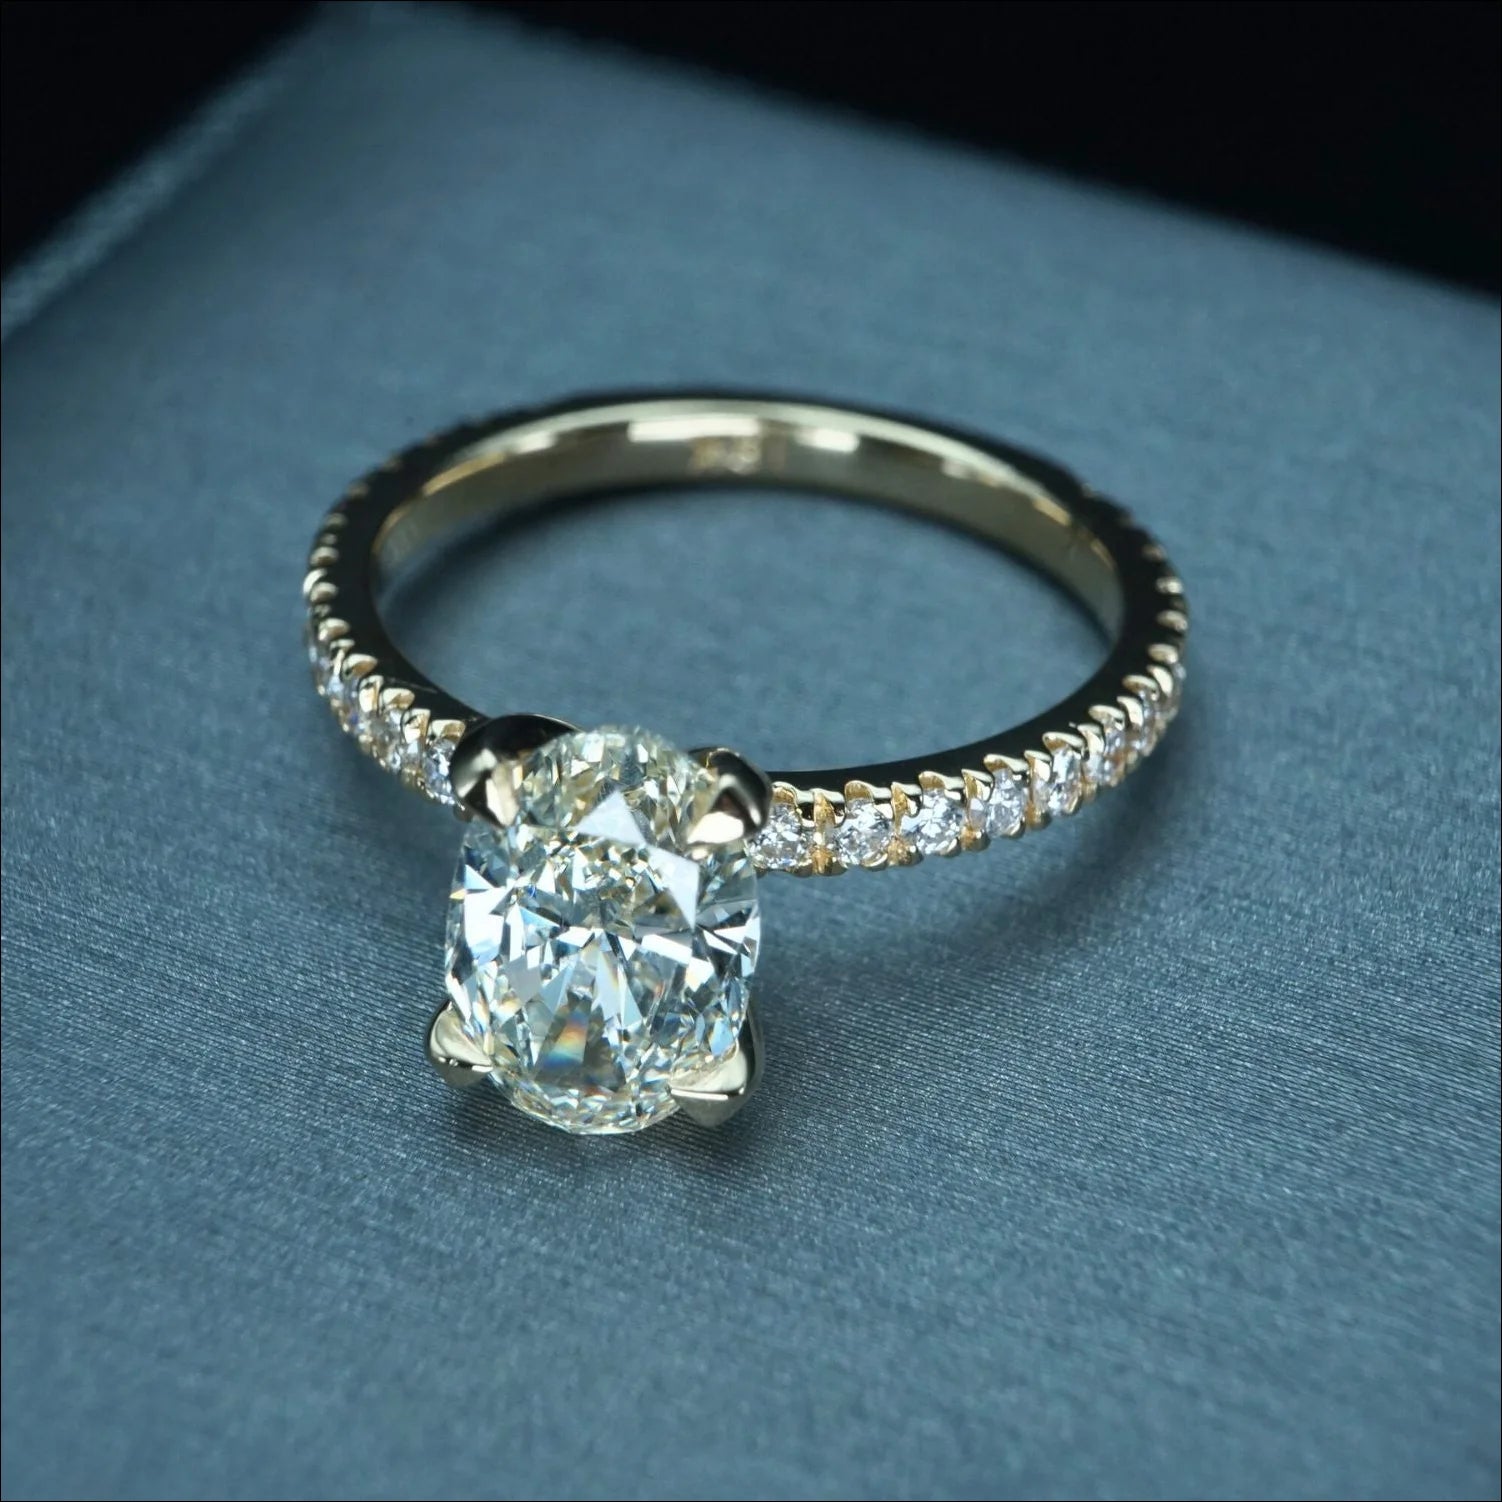 Luxury 18k Gold Oval Diamond Pendant | Home page